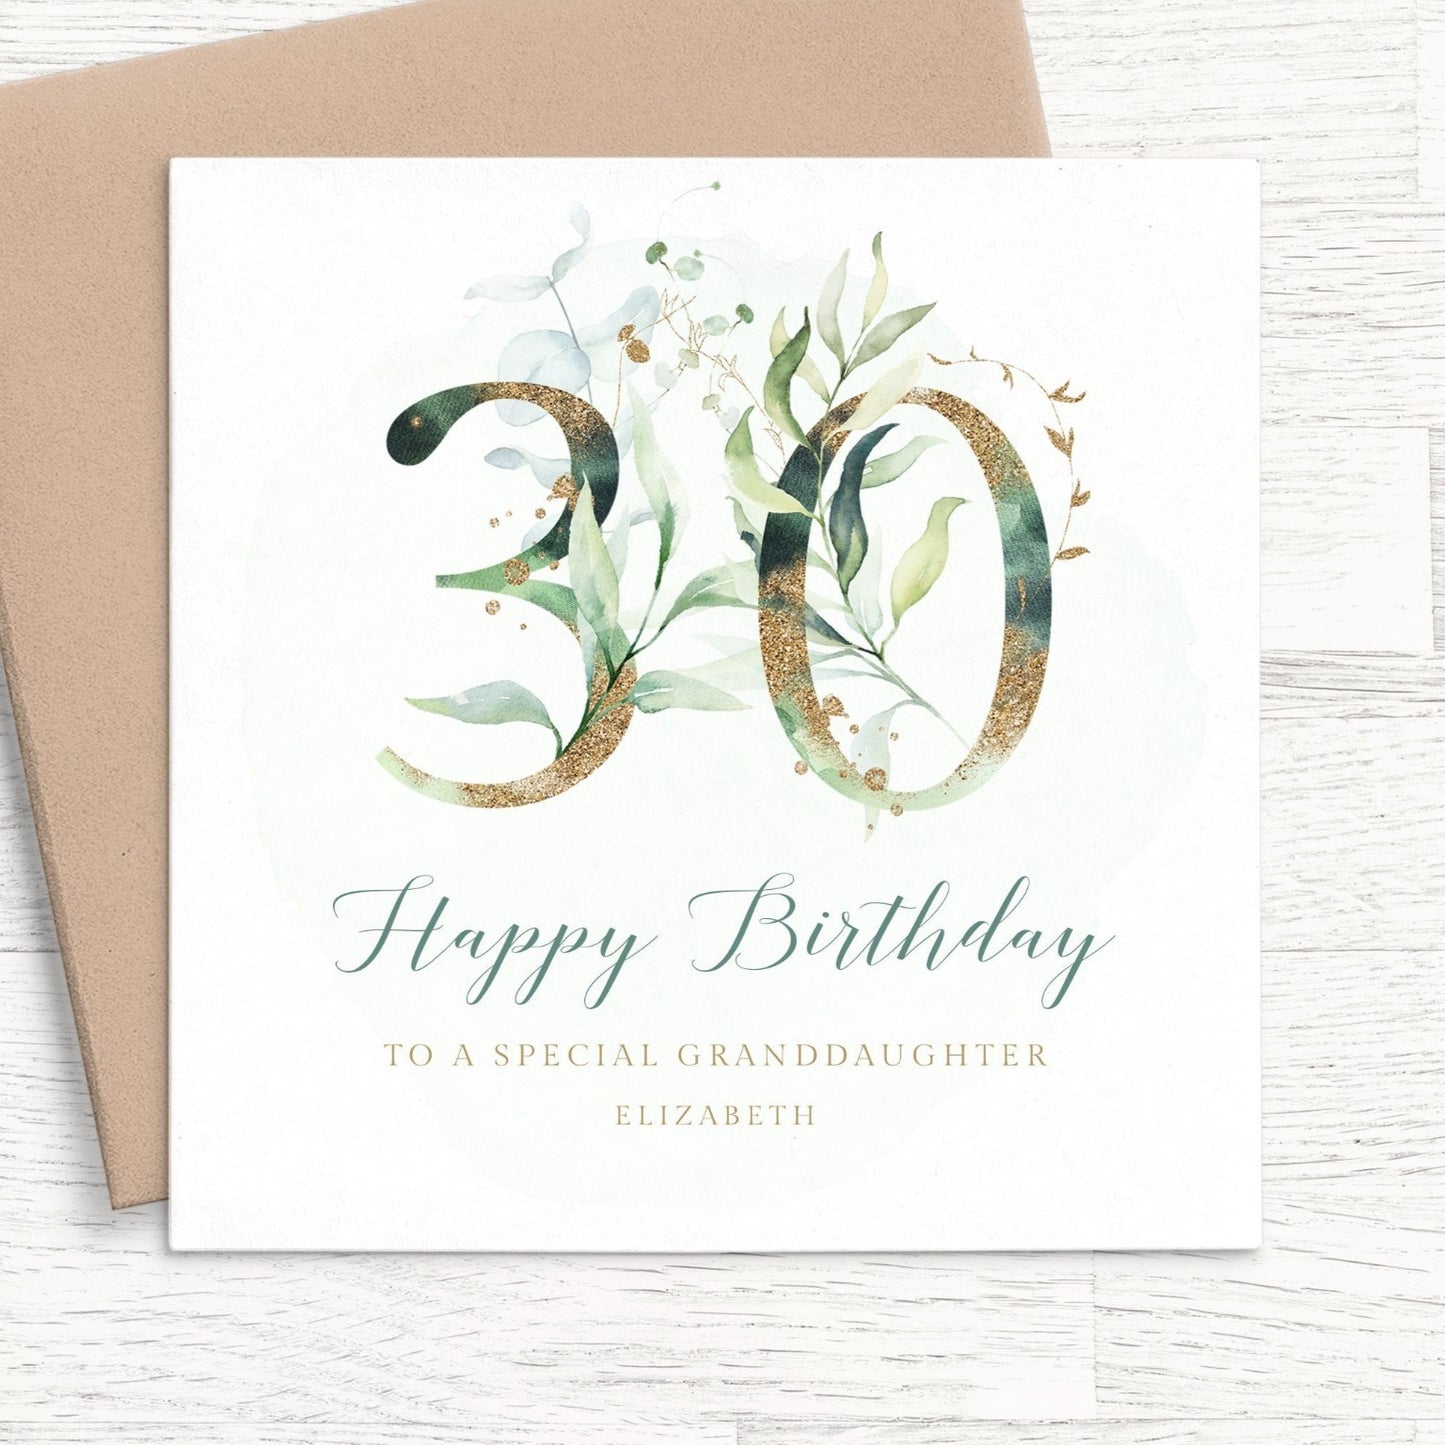 granddaughter eucalyptus 30th birthday card personalised smooth matte white cardstock kraft brown envelope